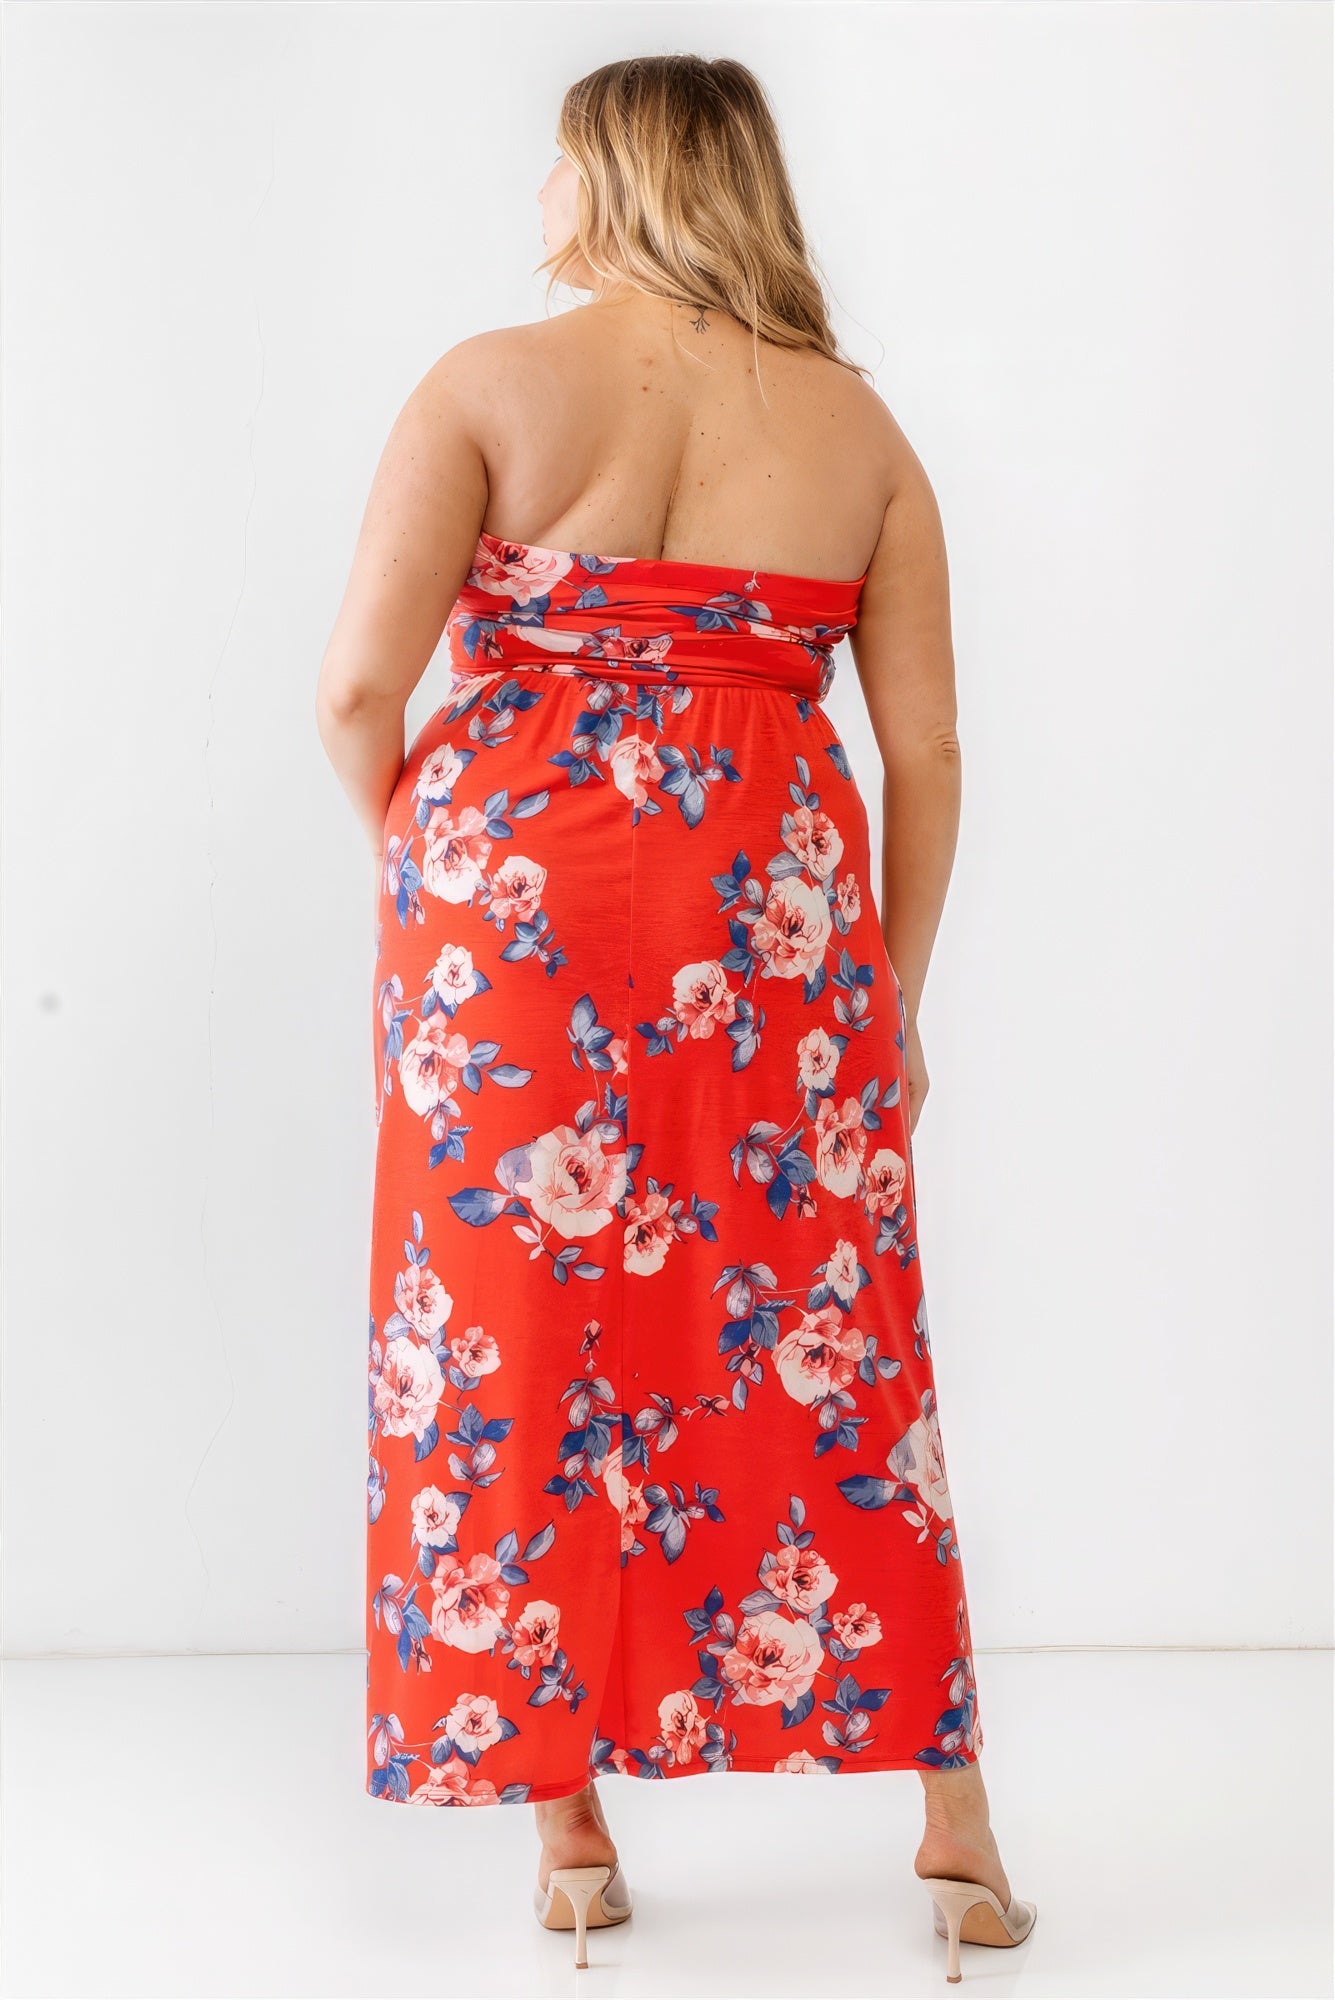 THE SAVANNA Plus Red Rose Print Ruched Strapless Midi Dress